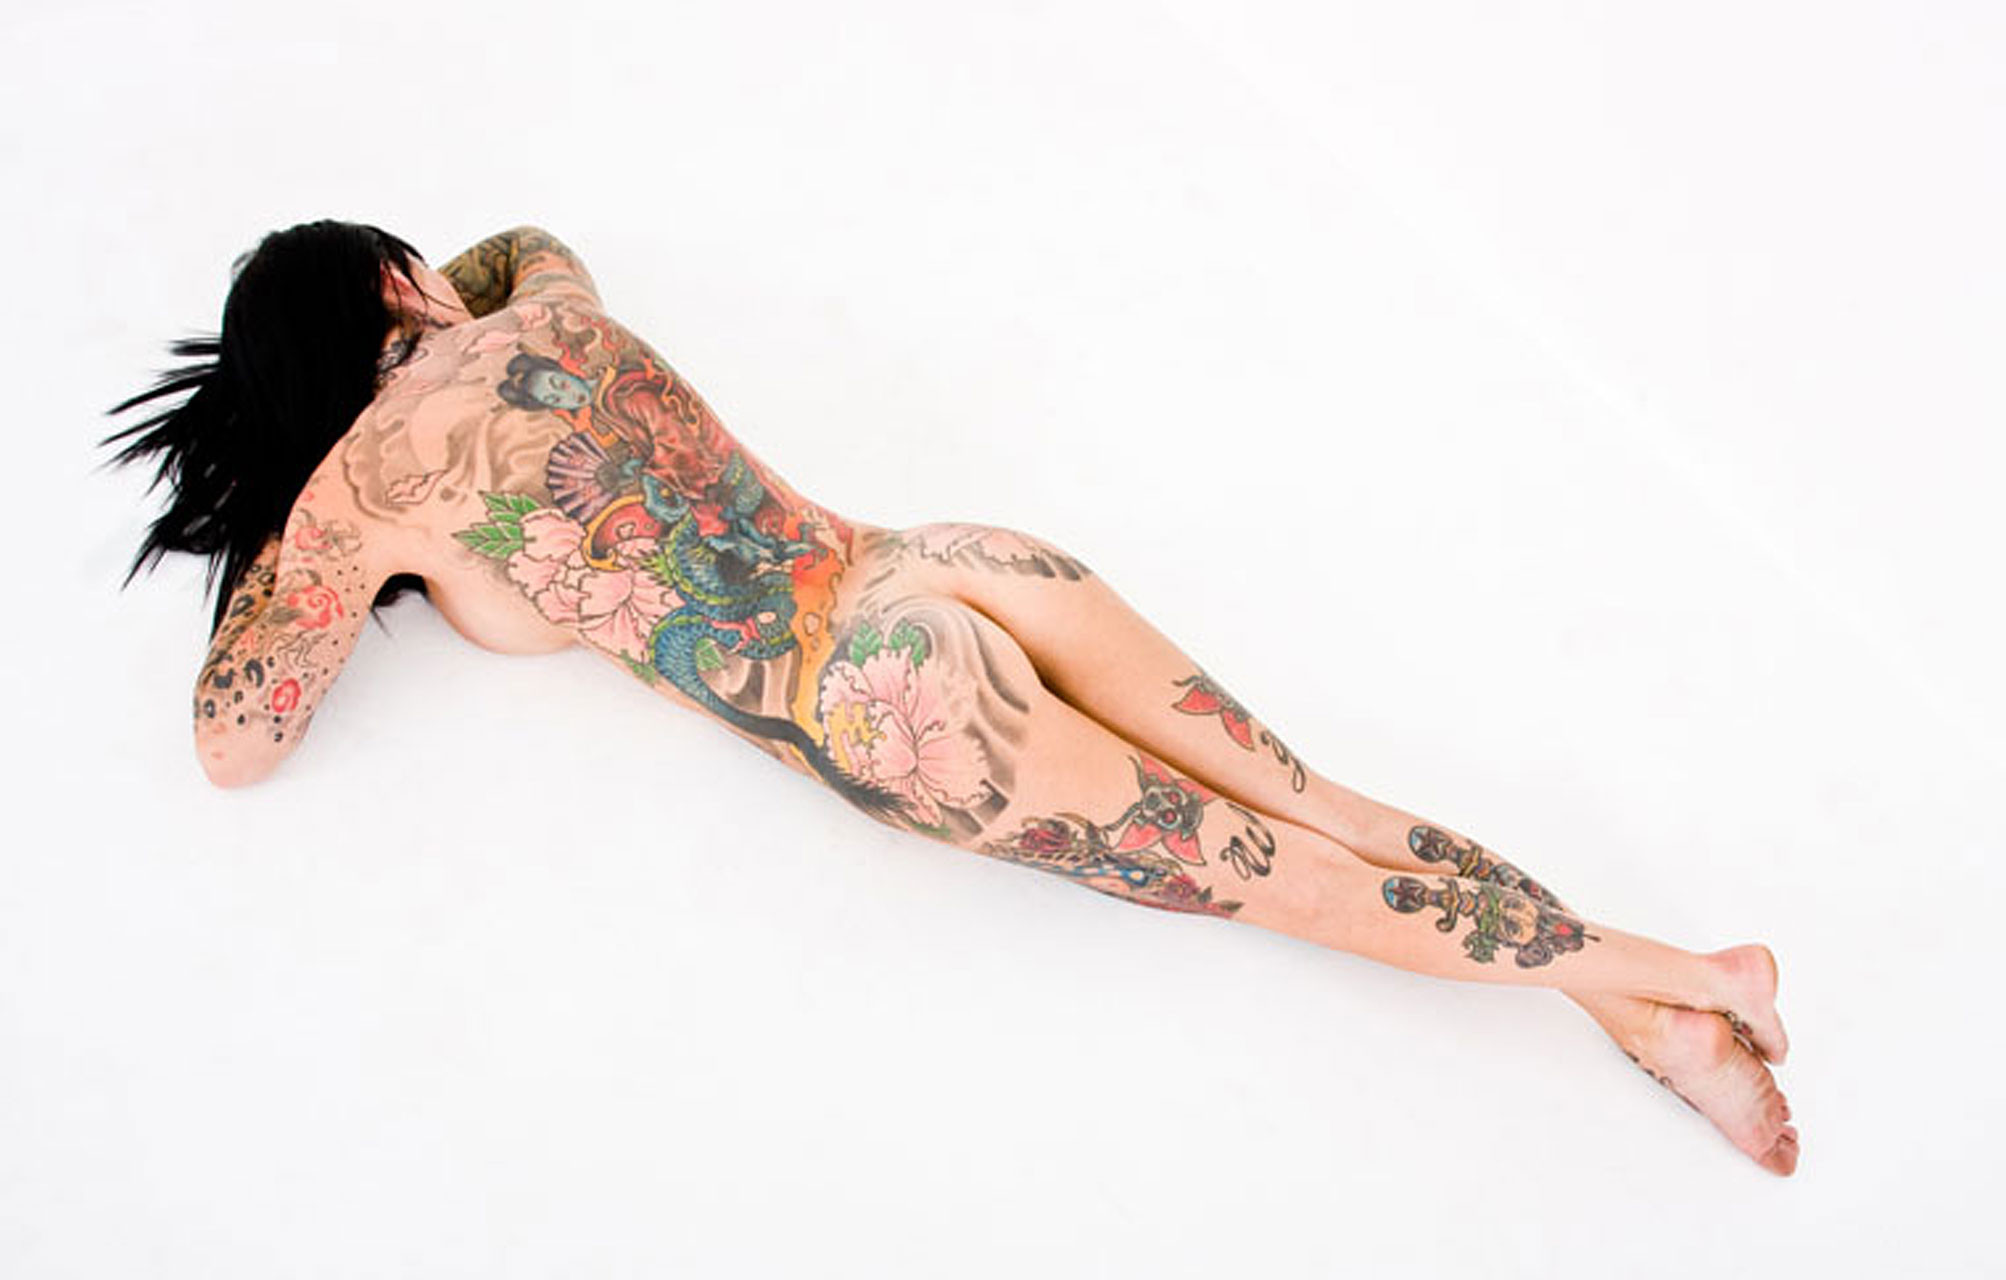 Michelle bombshell mostrando su cuerpo desnudo y sus tatuajes
 #75355698